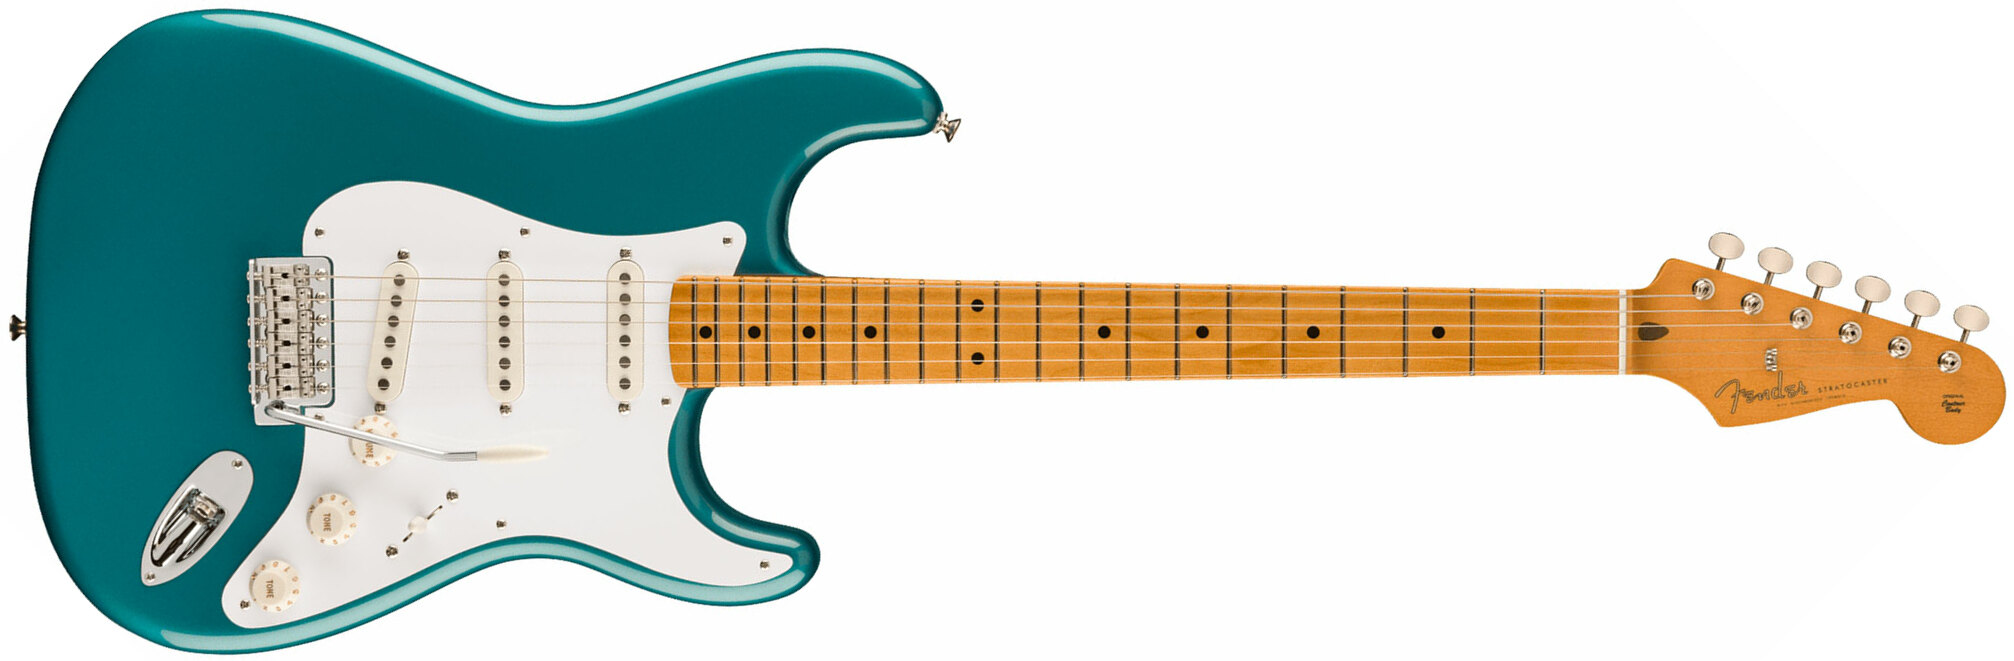 Fender Strat 50s Vintera 2 Mex 3s Trem Mn - Ocean Turquoise - Guitarra eléctrica con forma de str. - Main picture